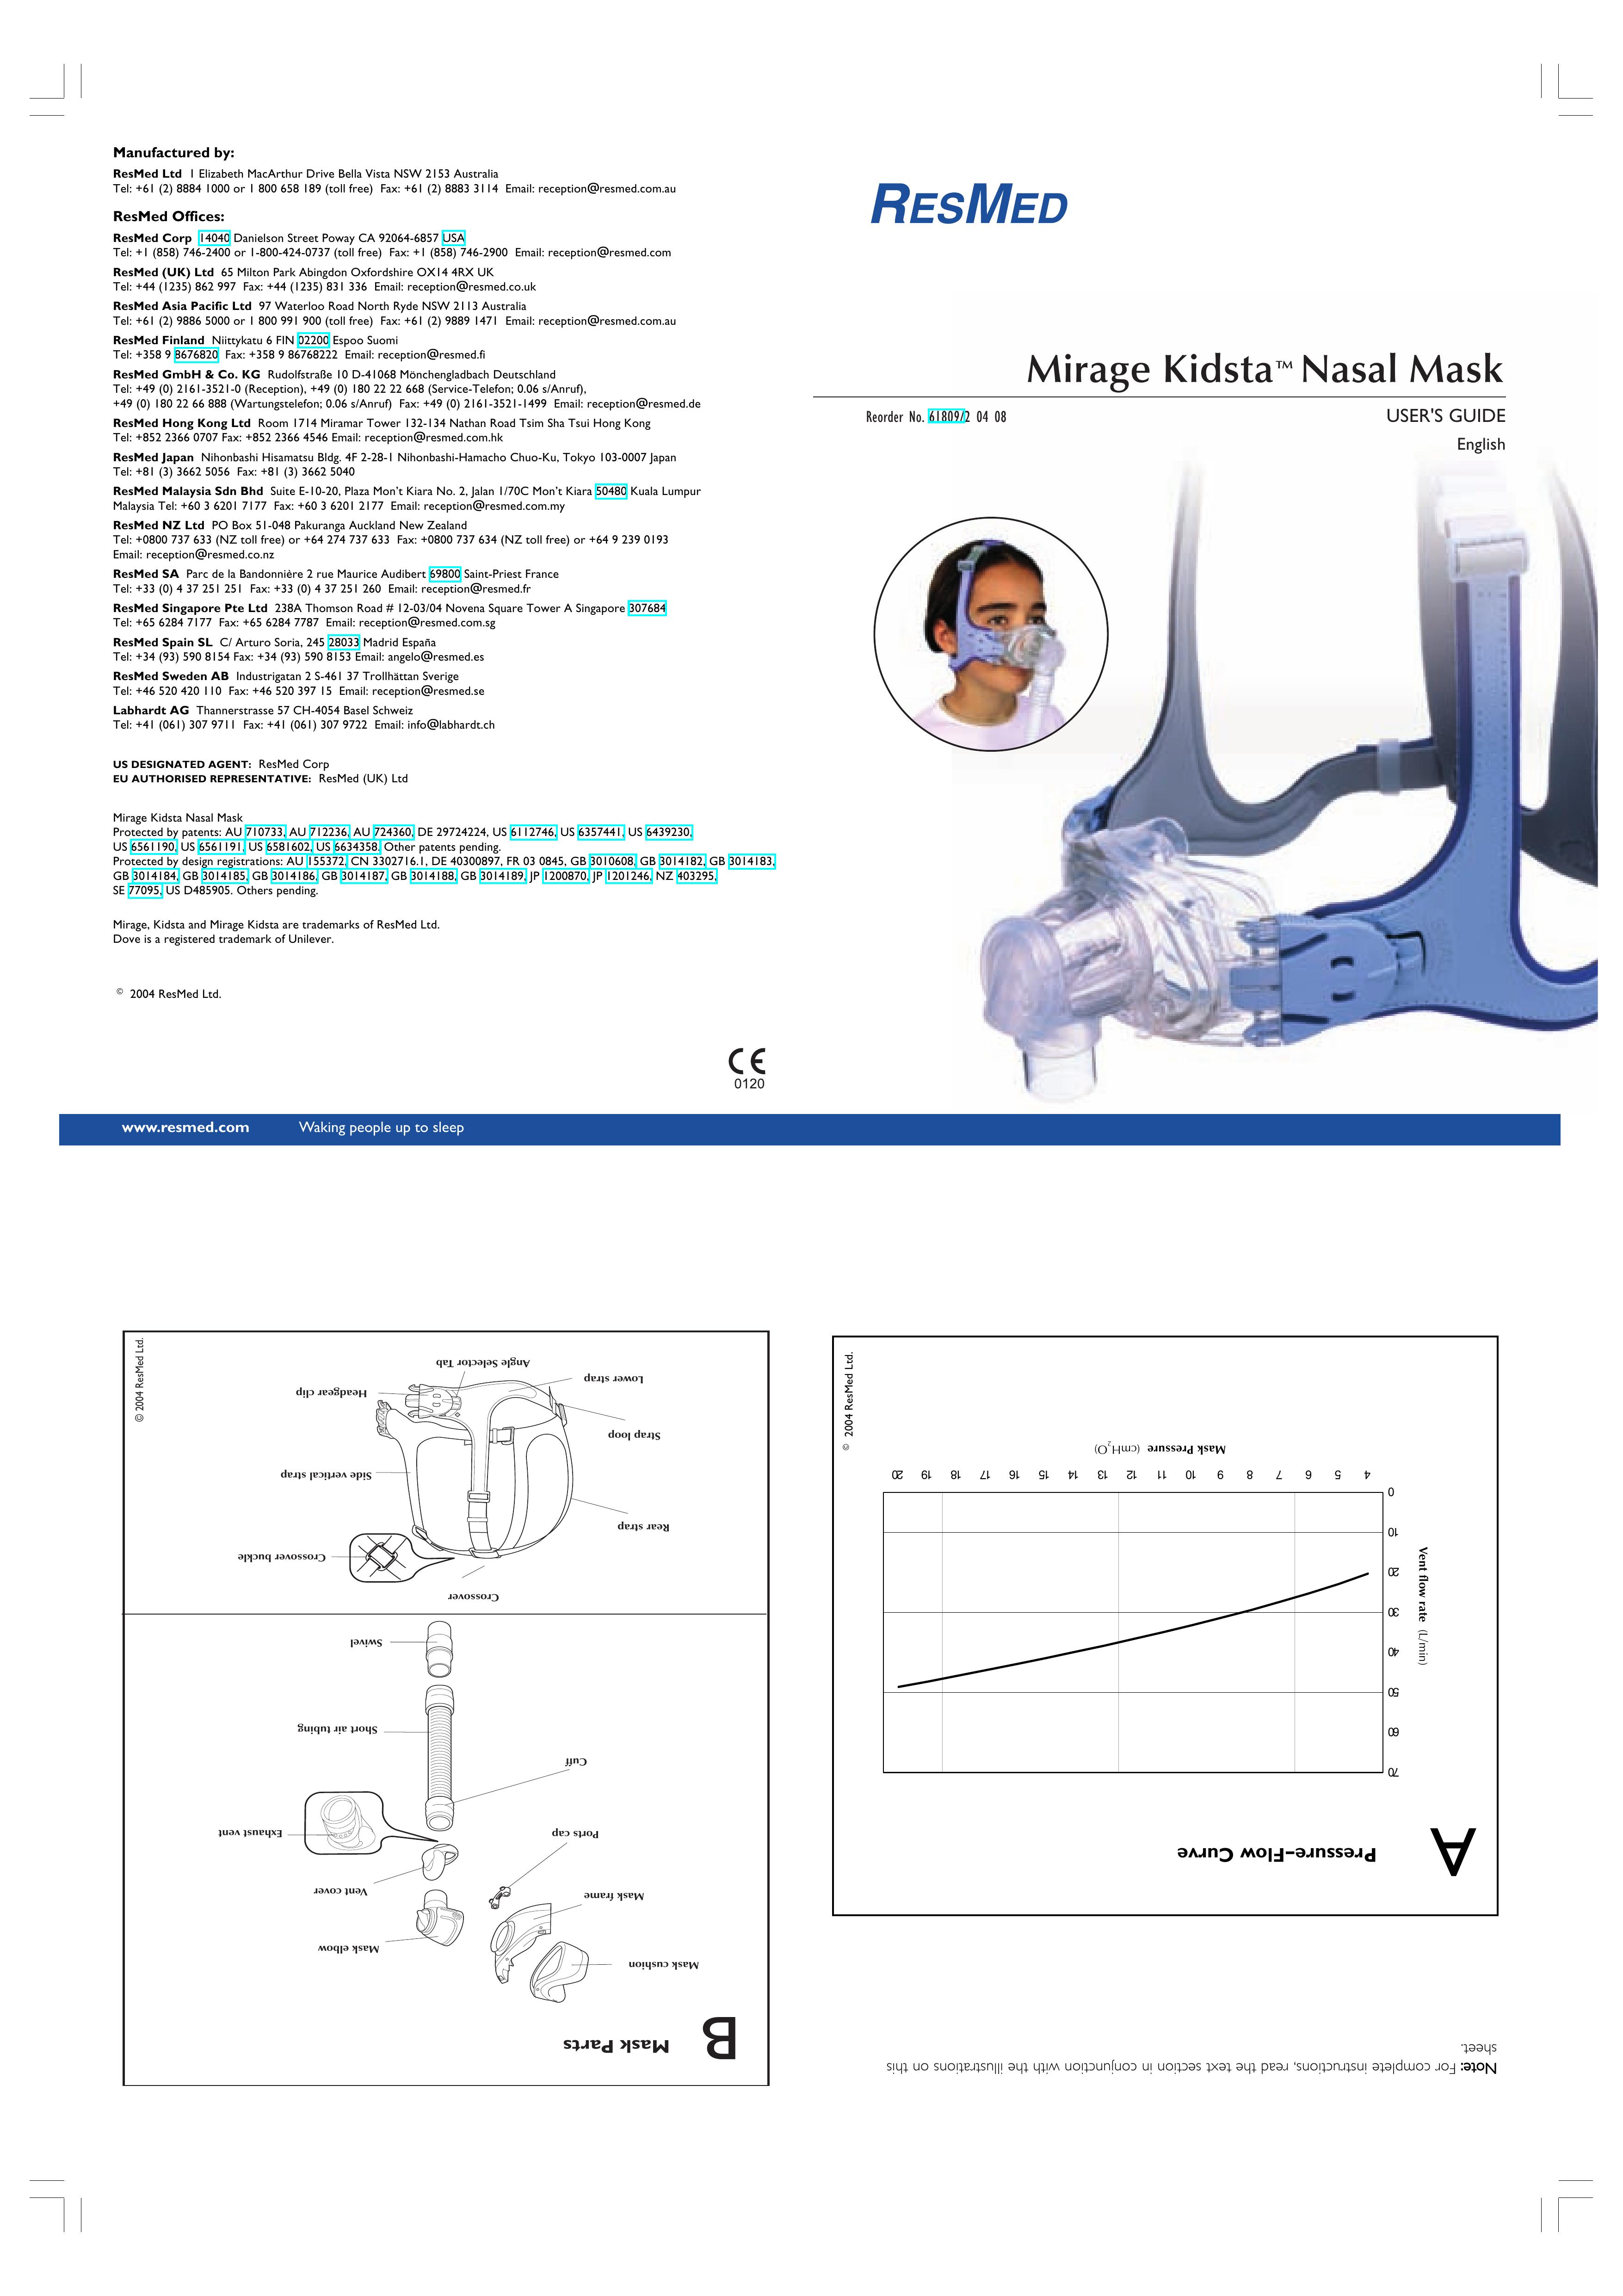 ResMed Mirage Kidsta Respiratory Product User Manual